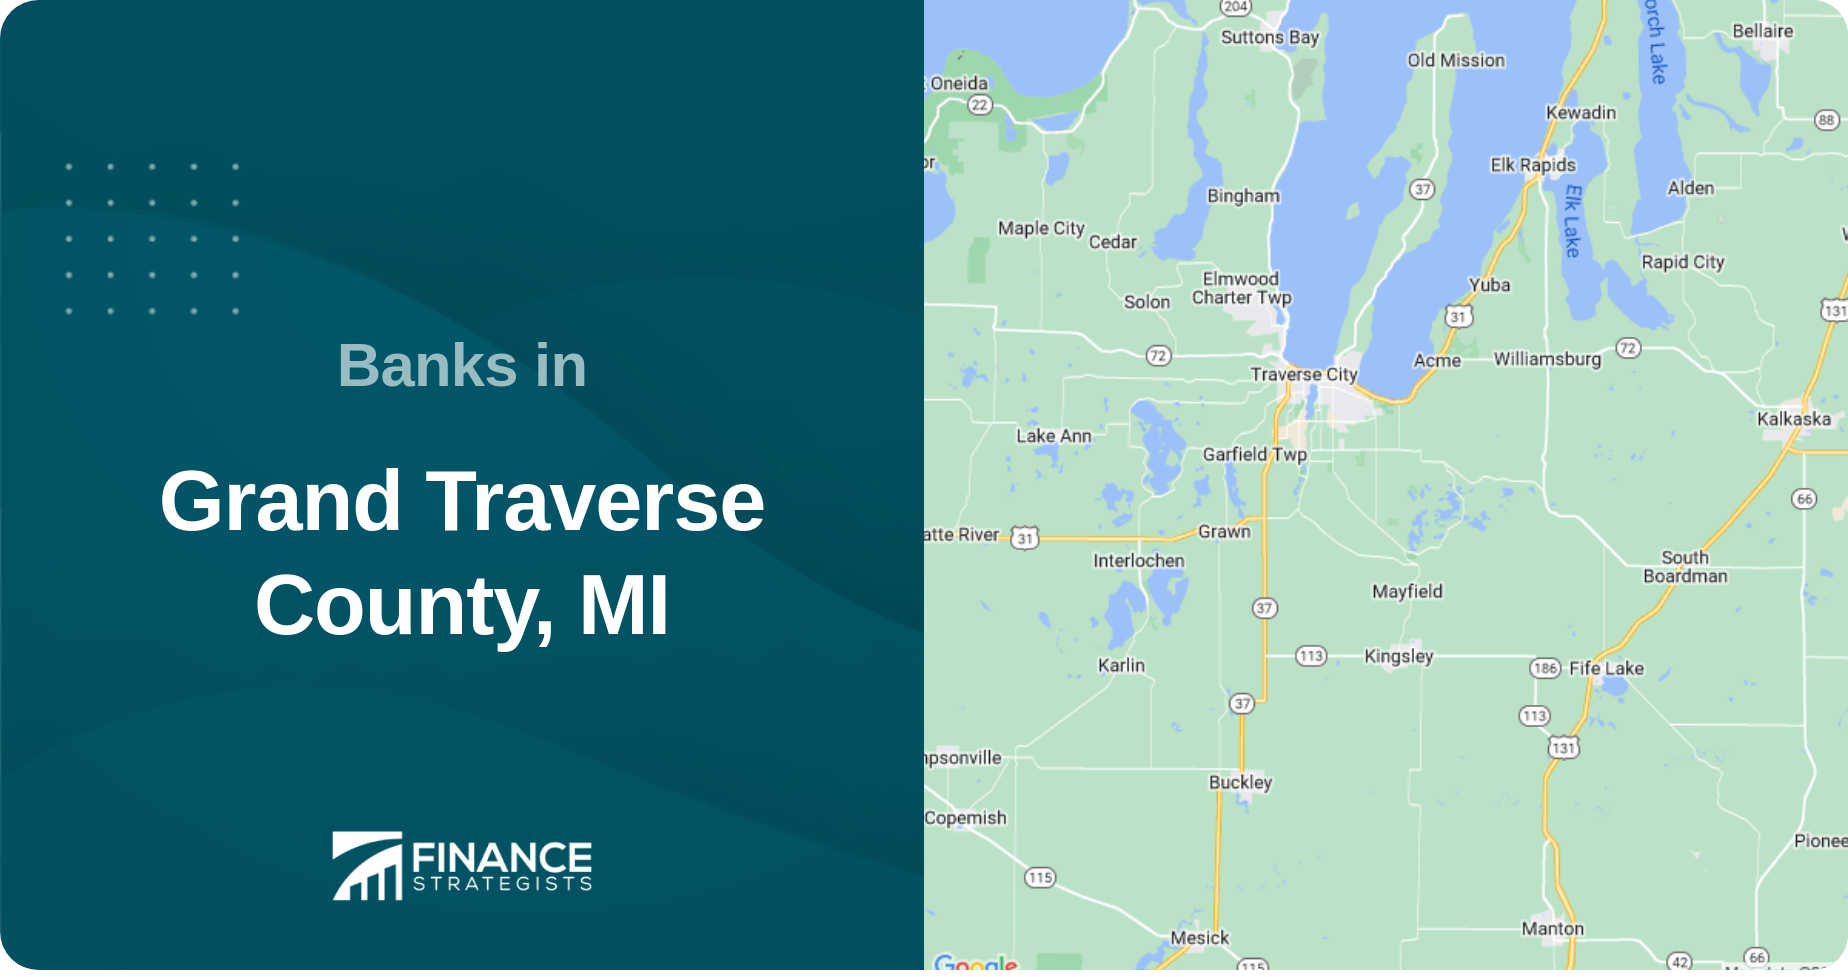 Banks in Grand Traverse County, MI